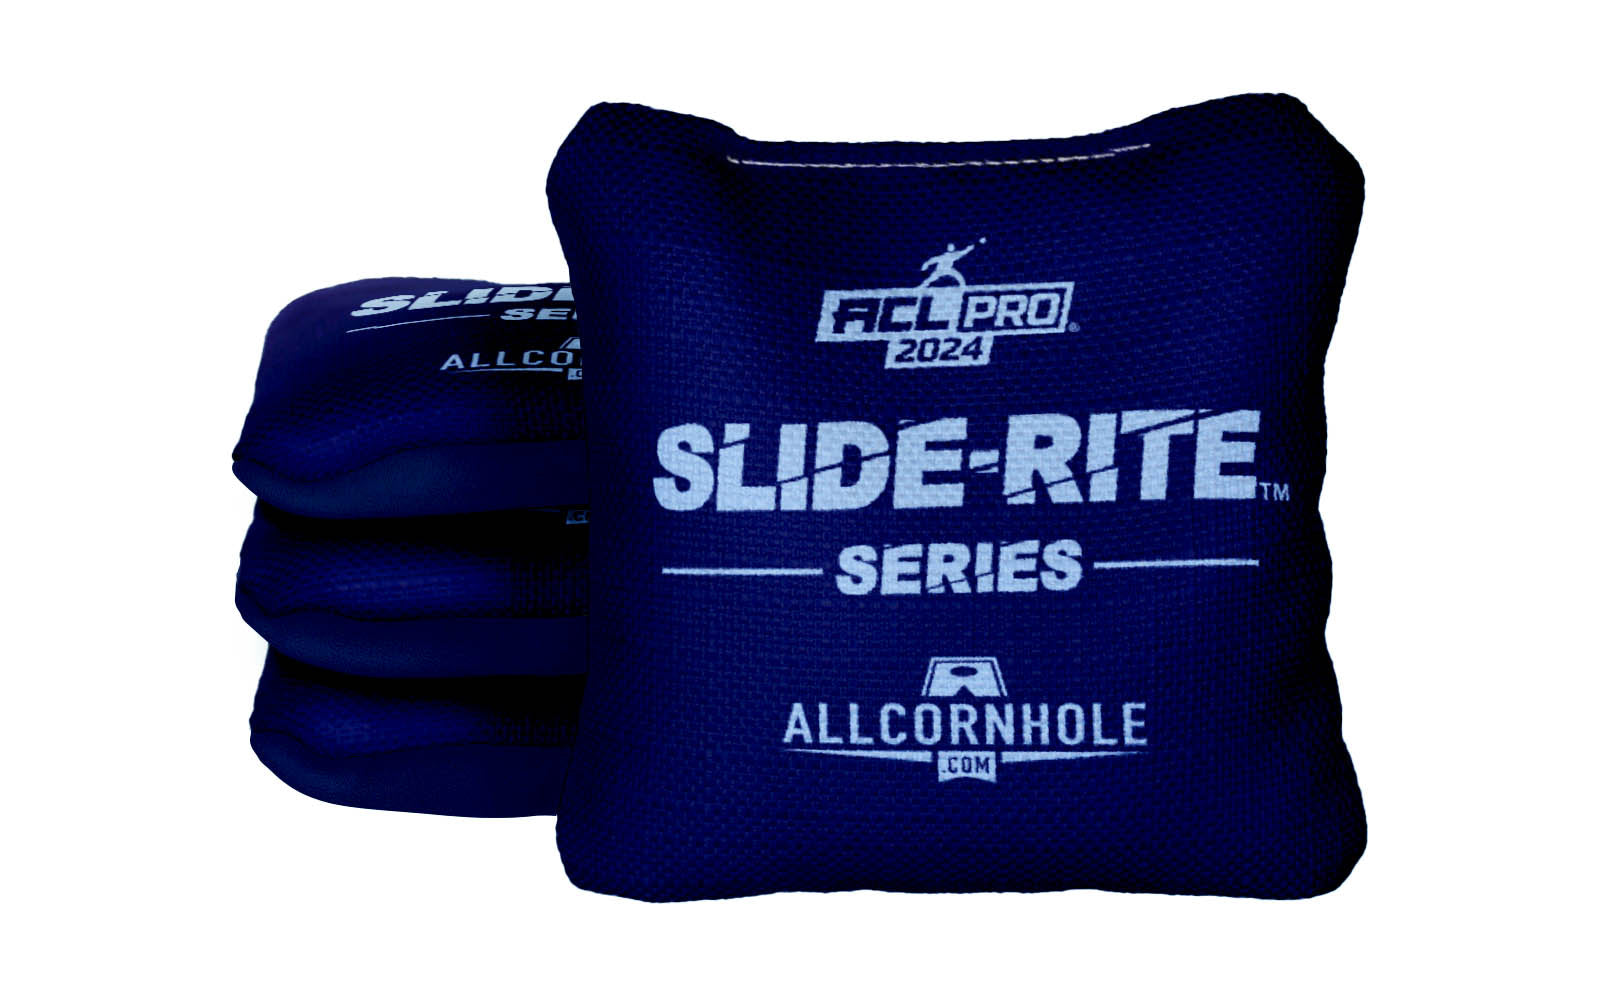 Officially Licensed Collegiate Cornhole Bags - AllCornhole Slide Rite - Set of 4 - University of North Carolina